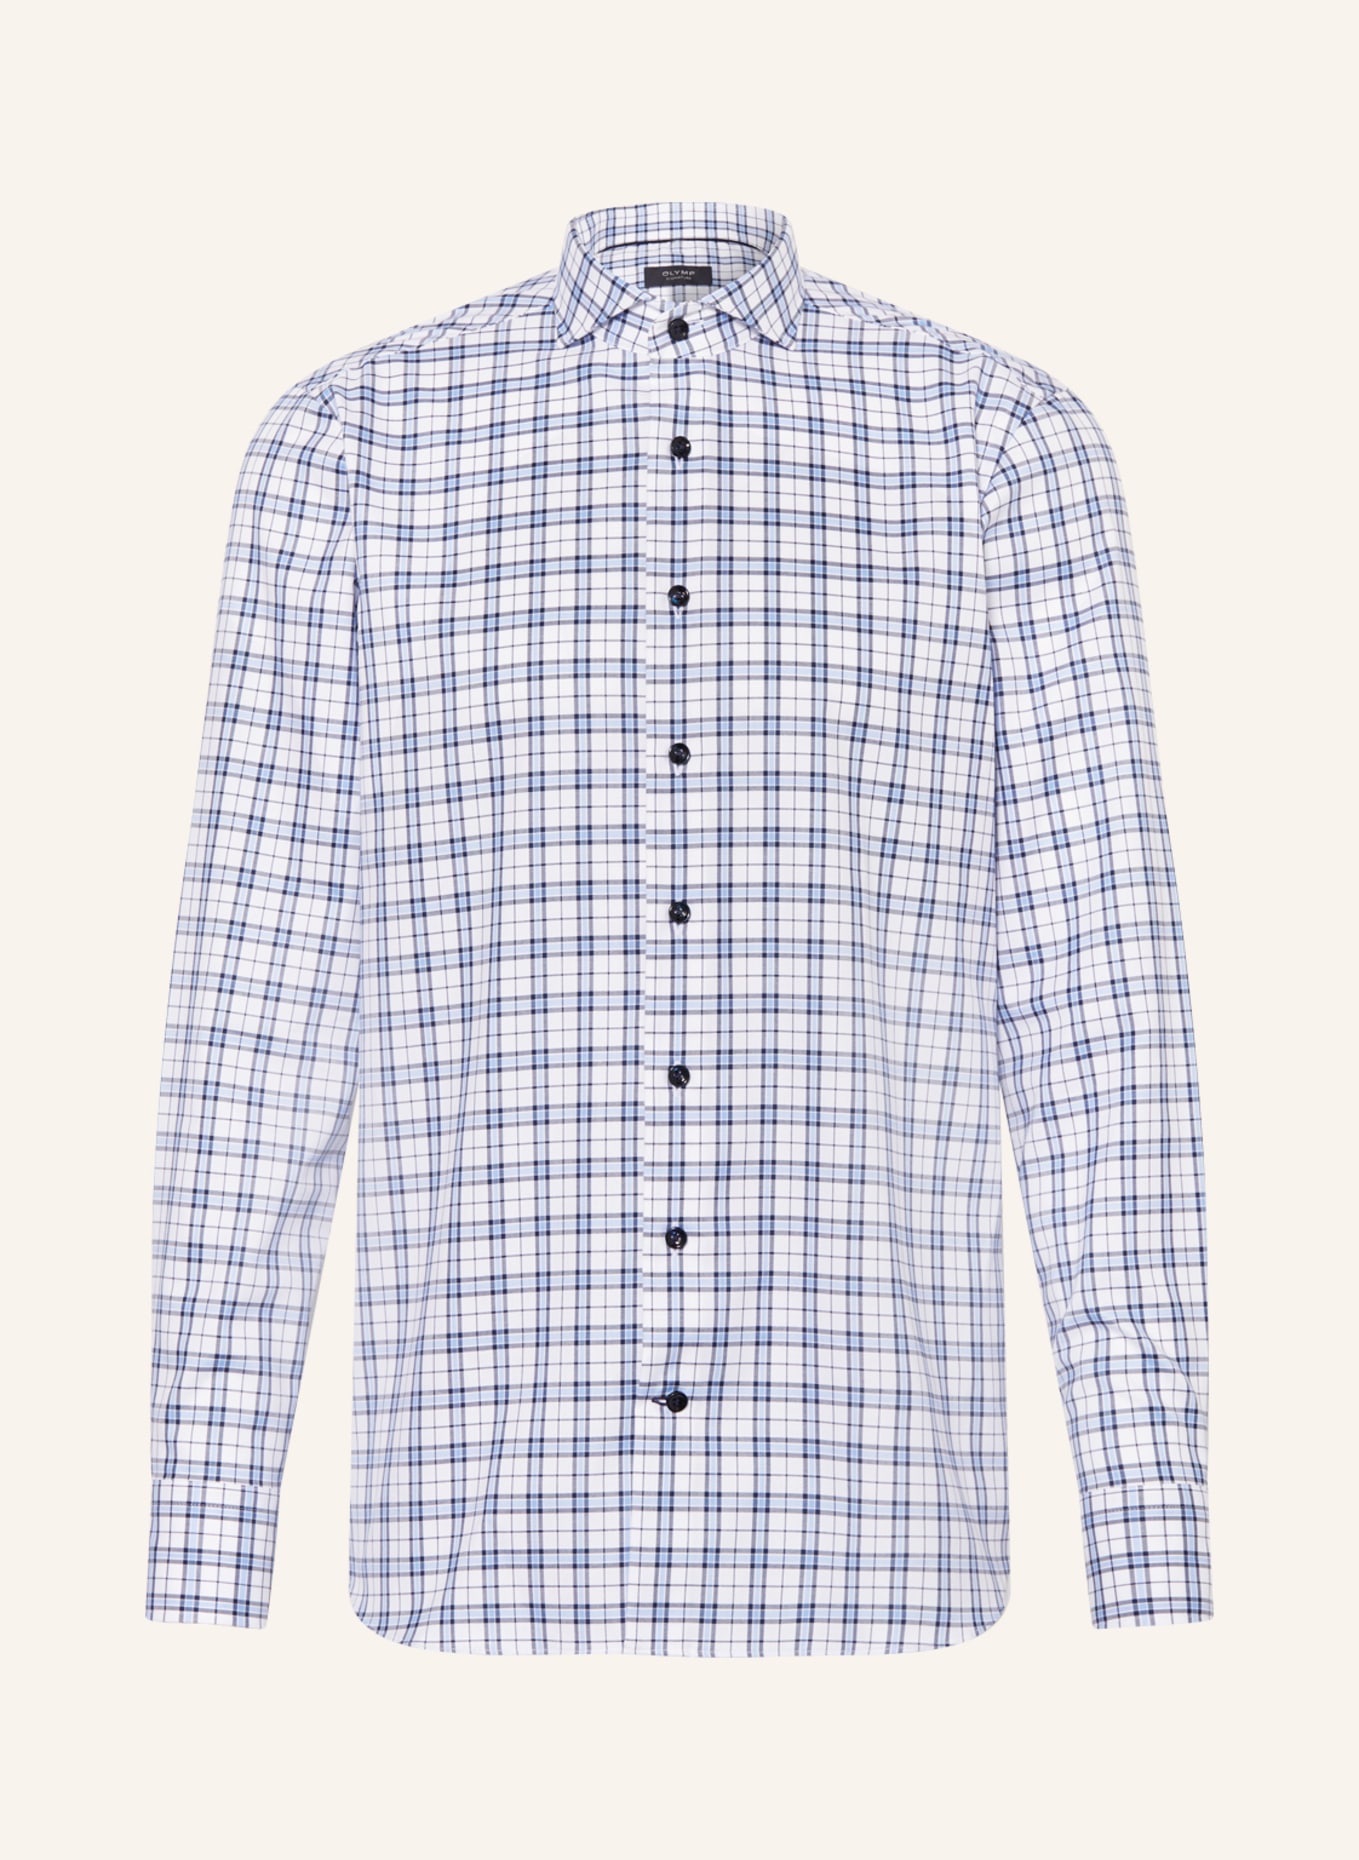 Рубашка OLYMP SIGNATURE Signature tailored fit, белый цена и фото